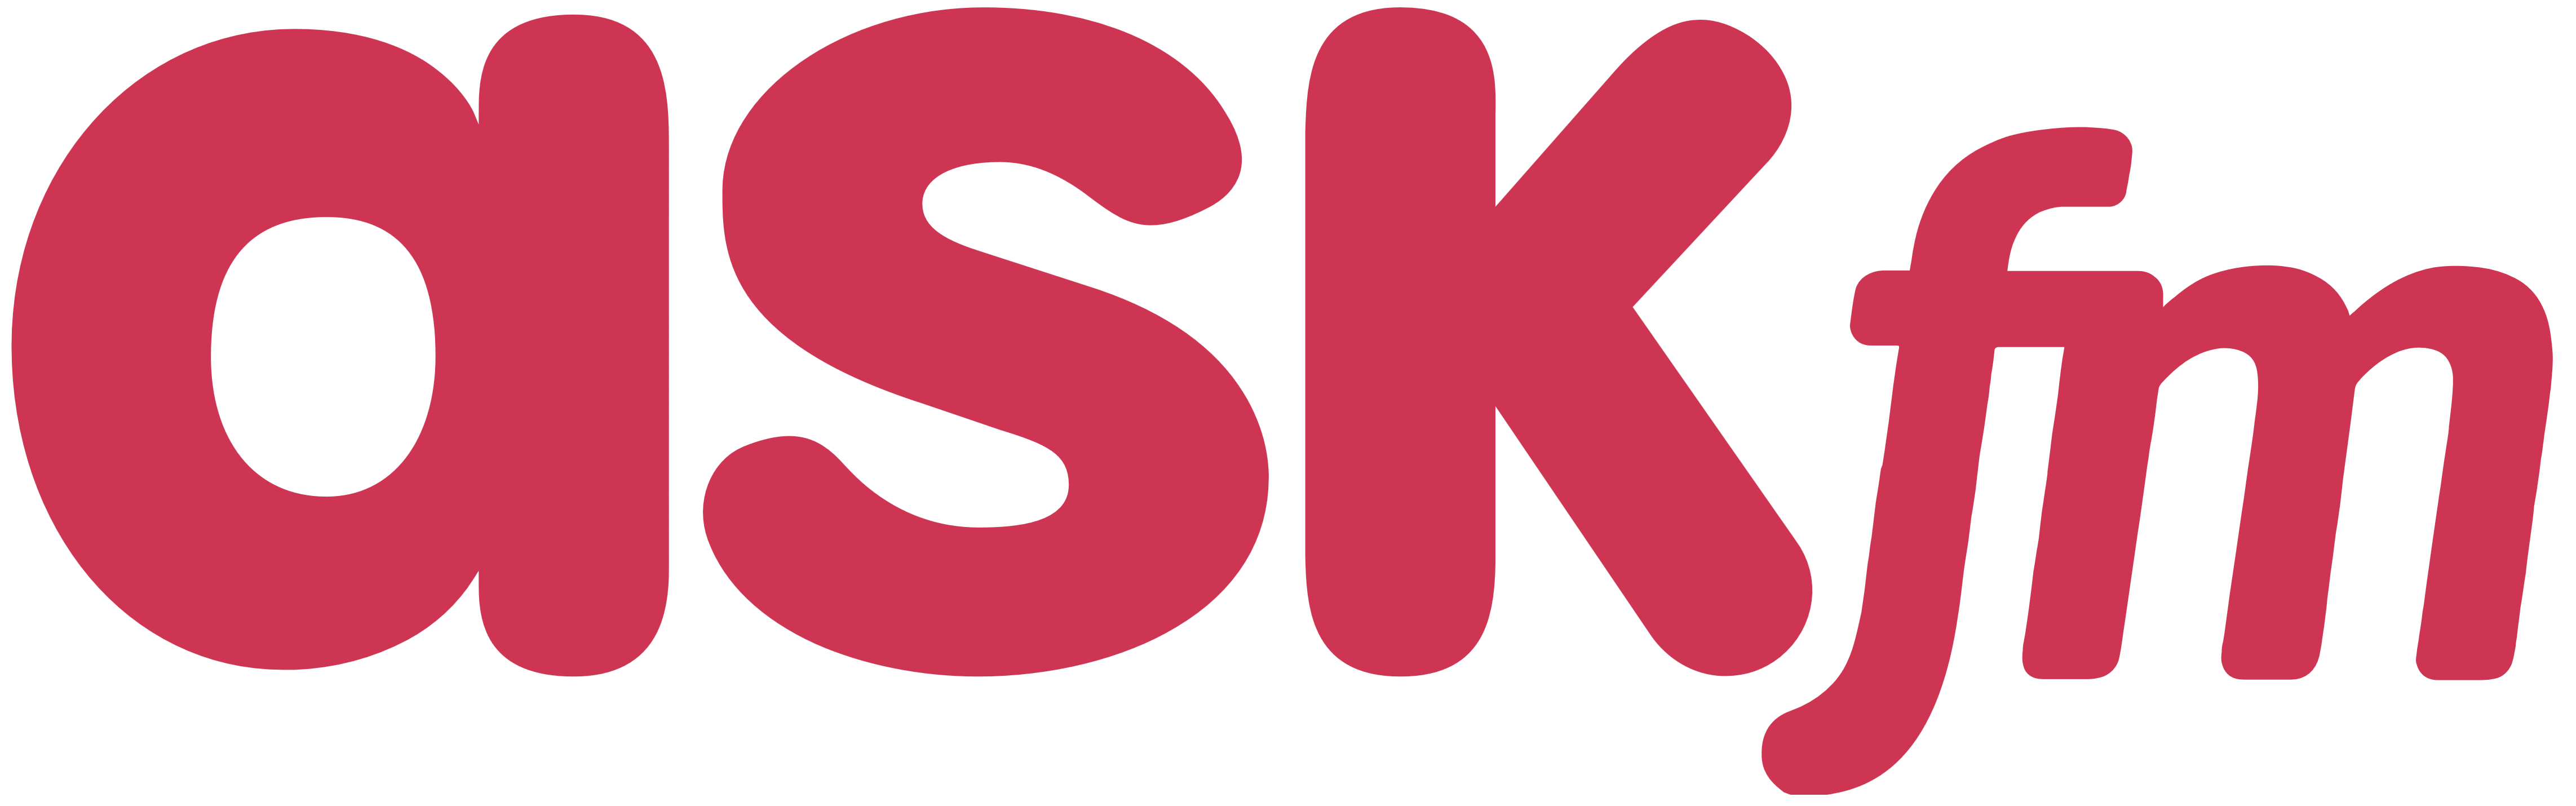 Ask.fm logo, logotype